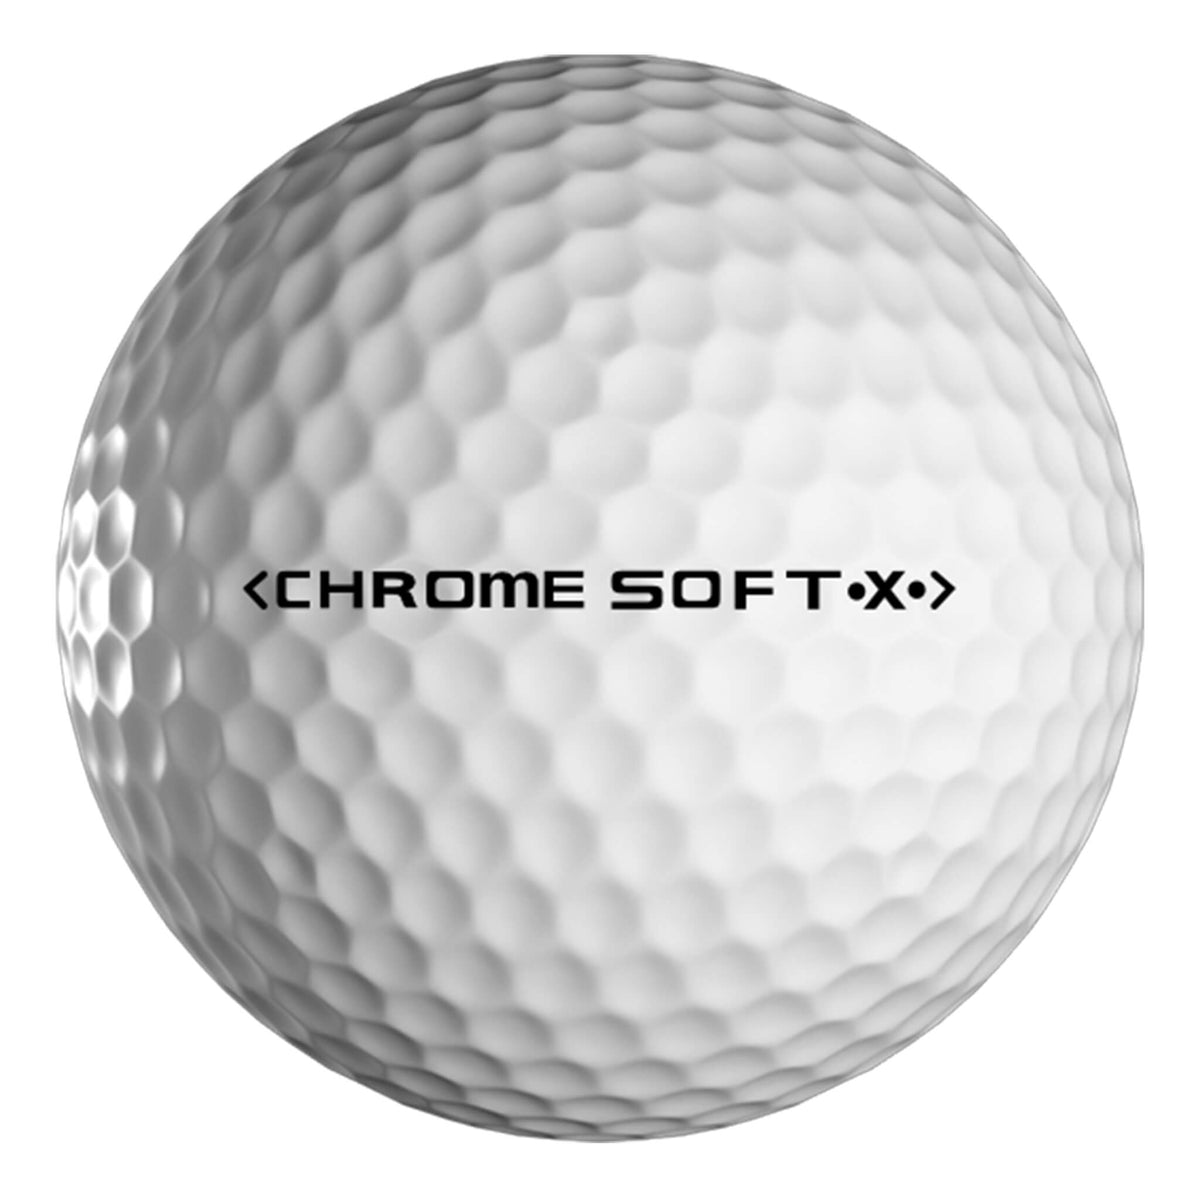 Callaway Chrome Soft X